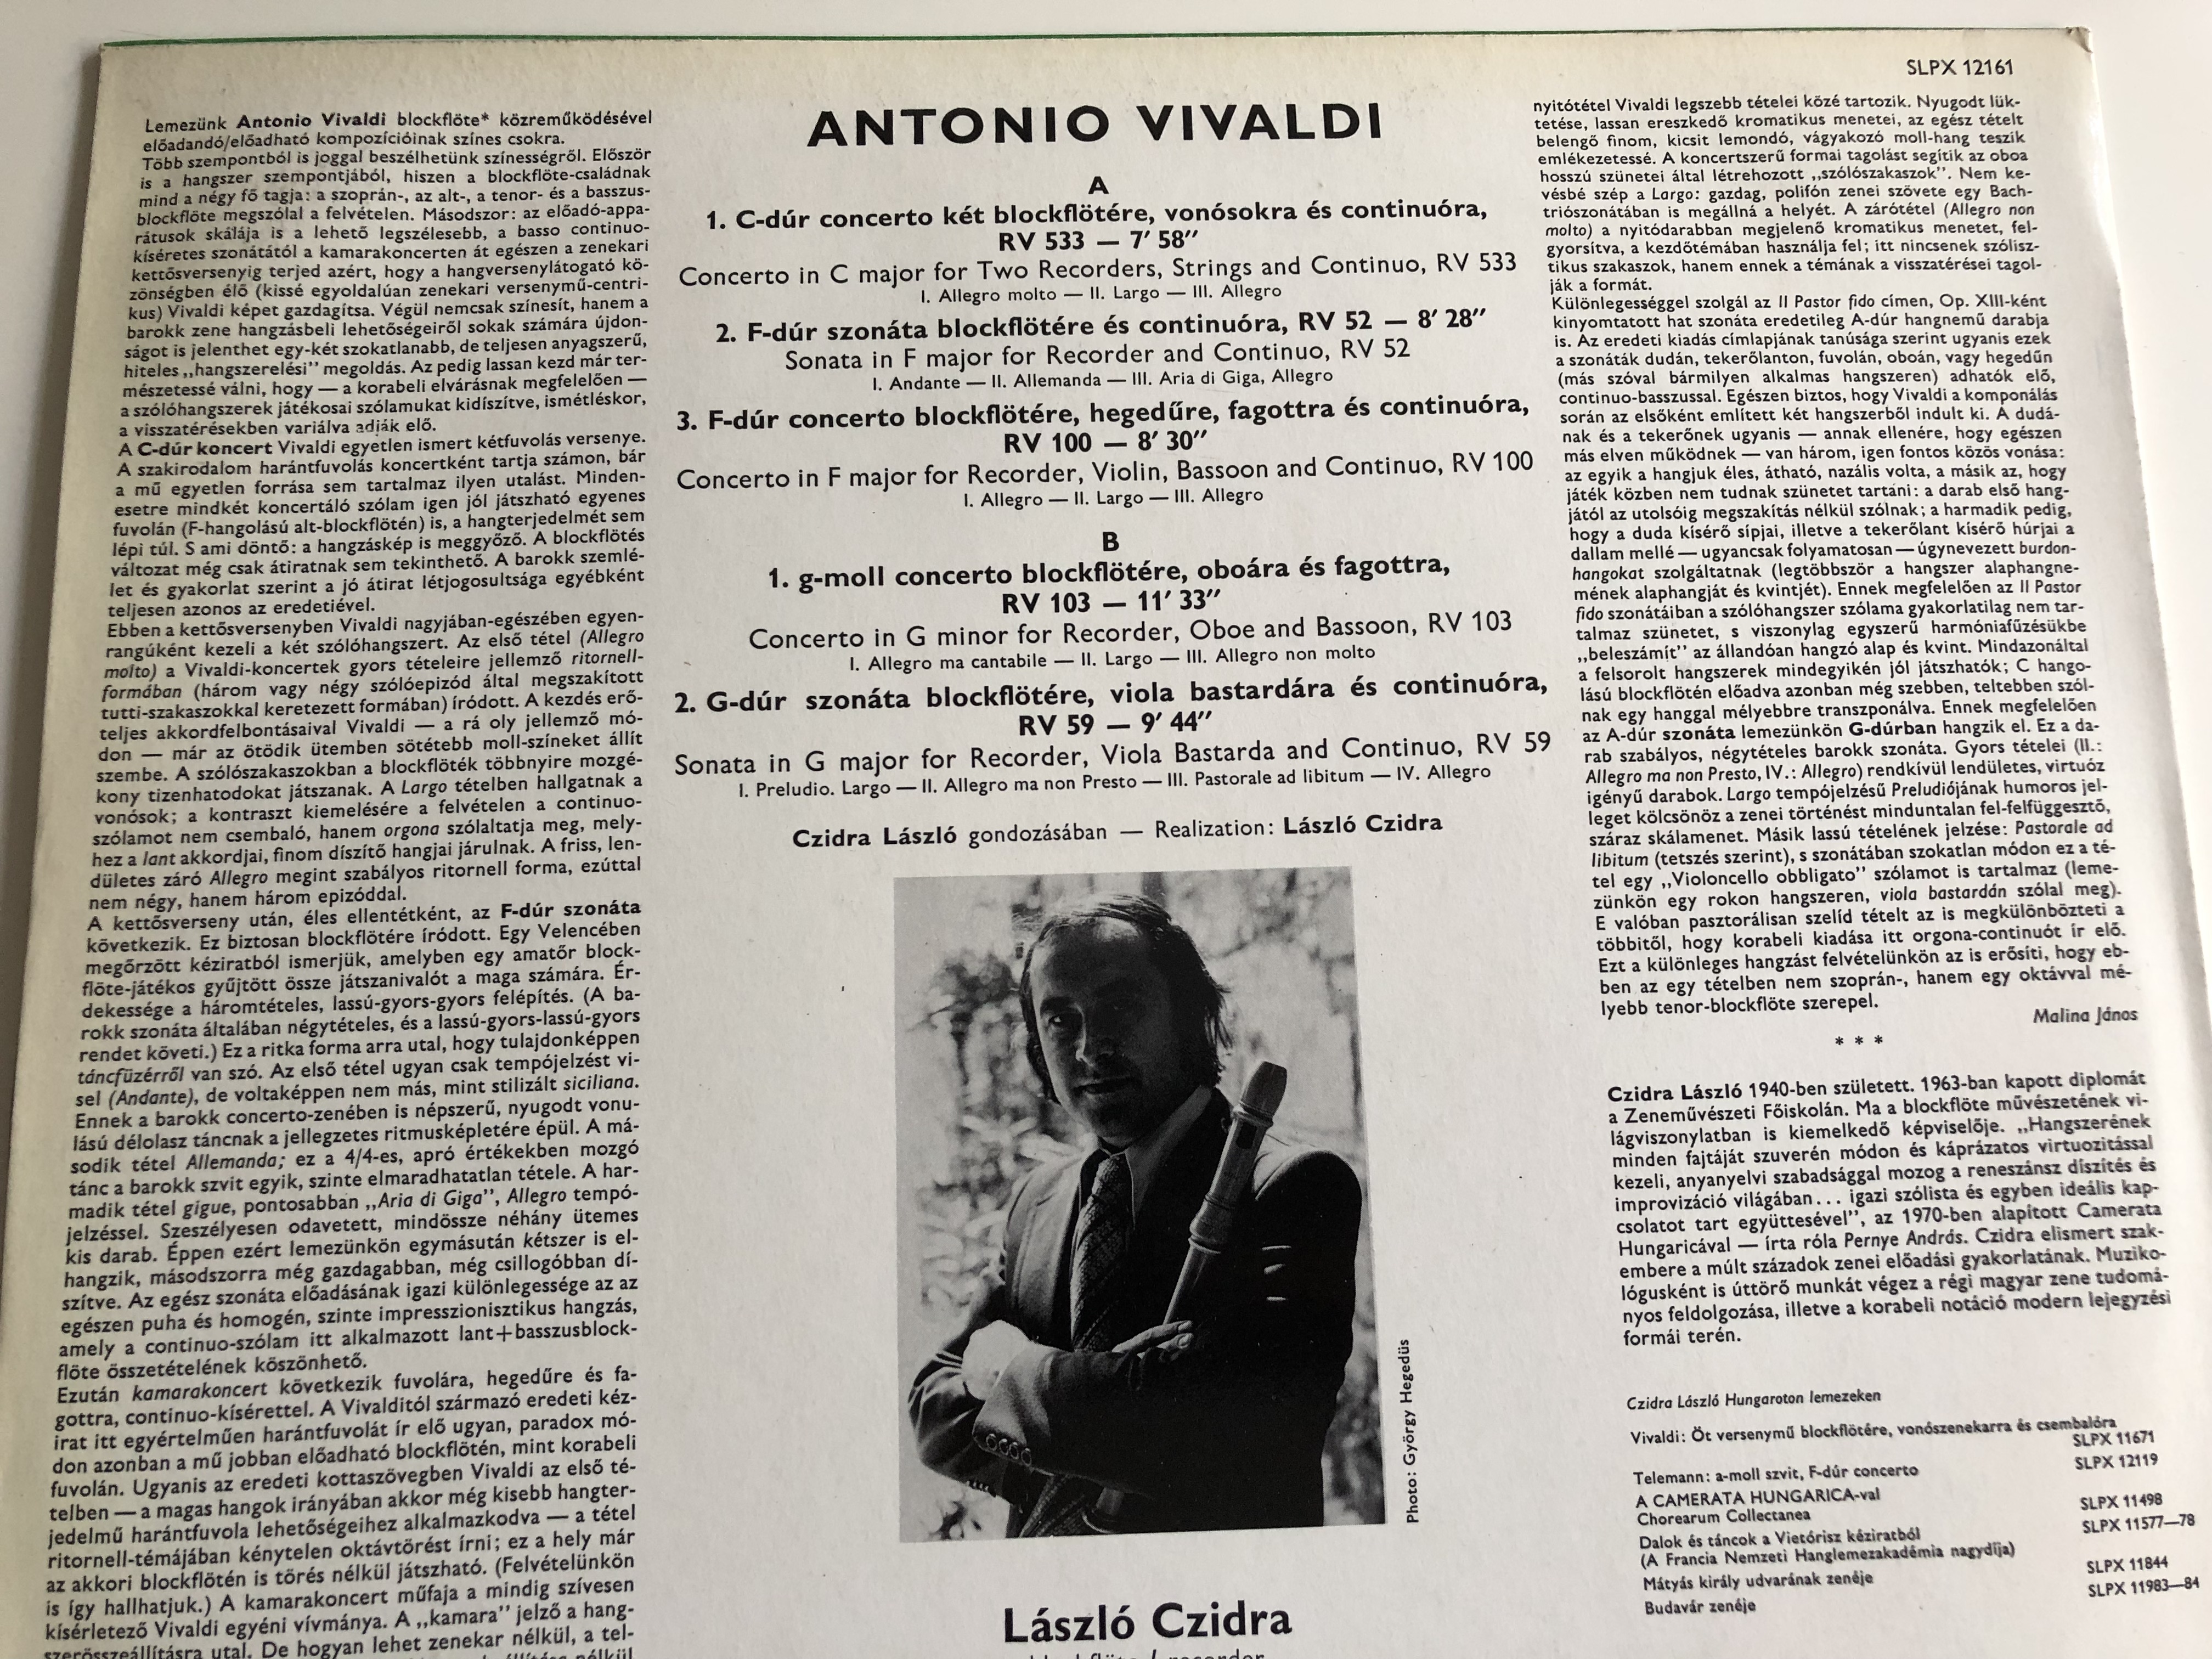 antonio-vivaldi-three-concerti-two-sonatas-l-szl-czidra-liszt-ferenc-chamber-orchestra-budapest-j-nos-rolla-hungaroton-lp-stereo-slpx-12161-3-.jpg